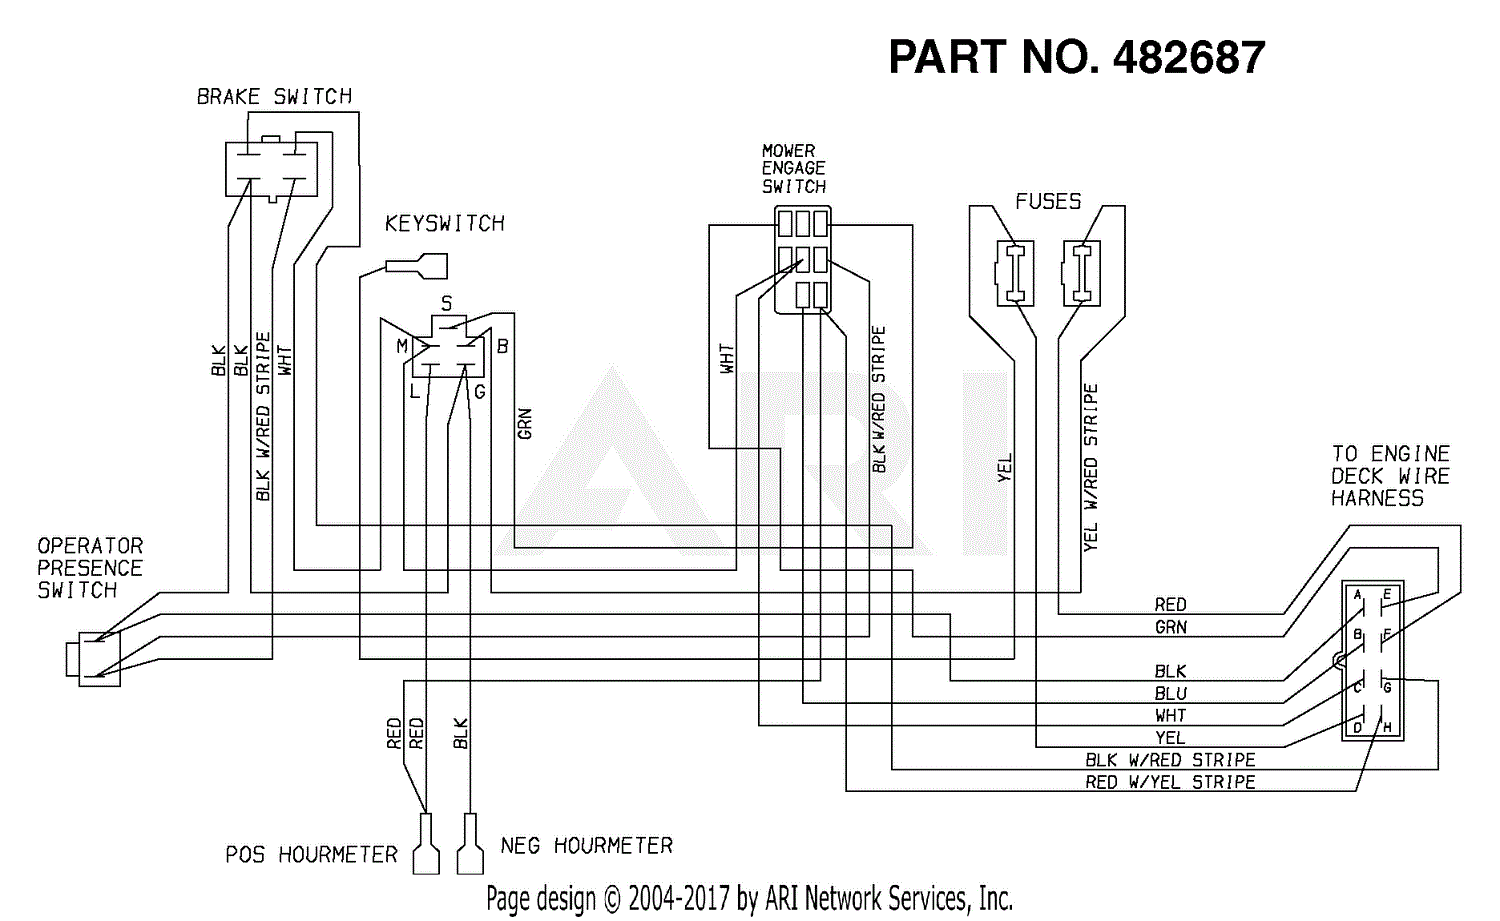 Diagram Turf Tiger Pto Switch Wiring Diagram Full Version Hd Quality Wiring Diagram Phasediagramboilingpoint Bottegas It